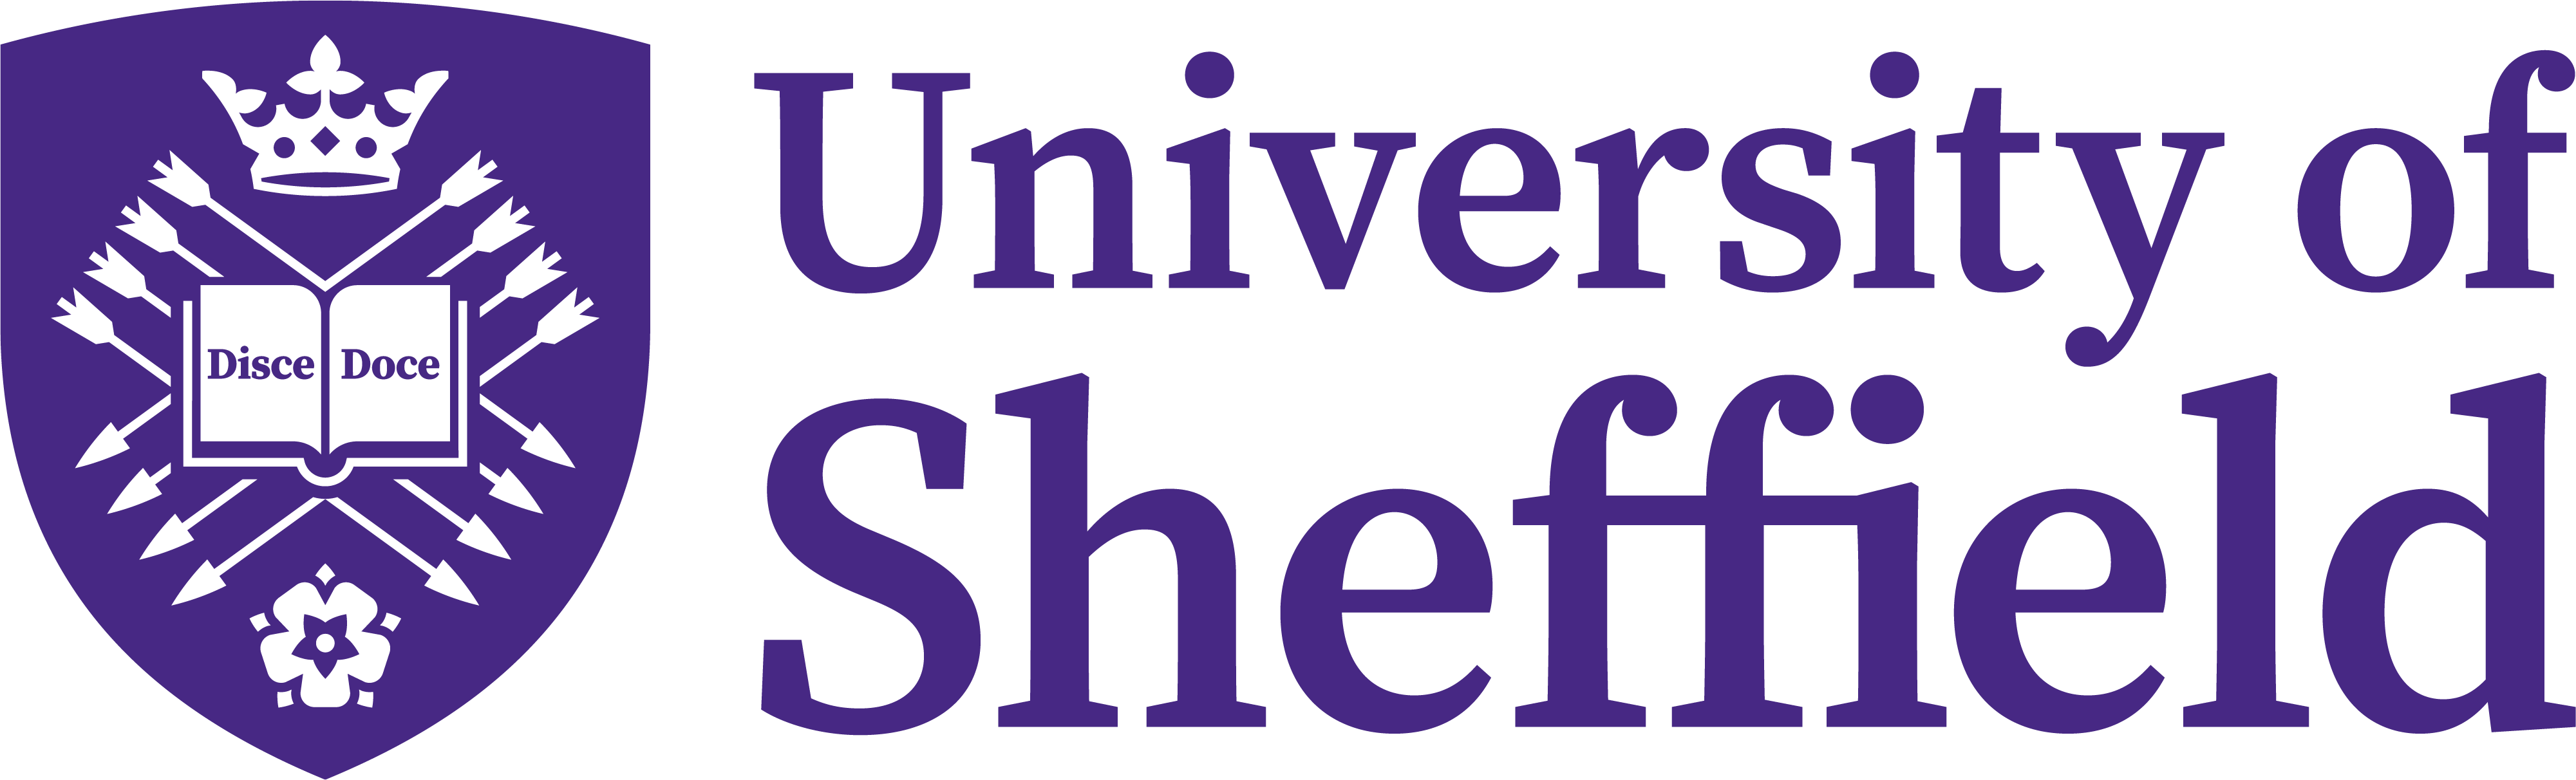 University of Sheffield, UK